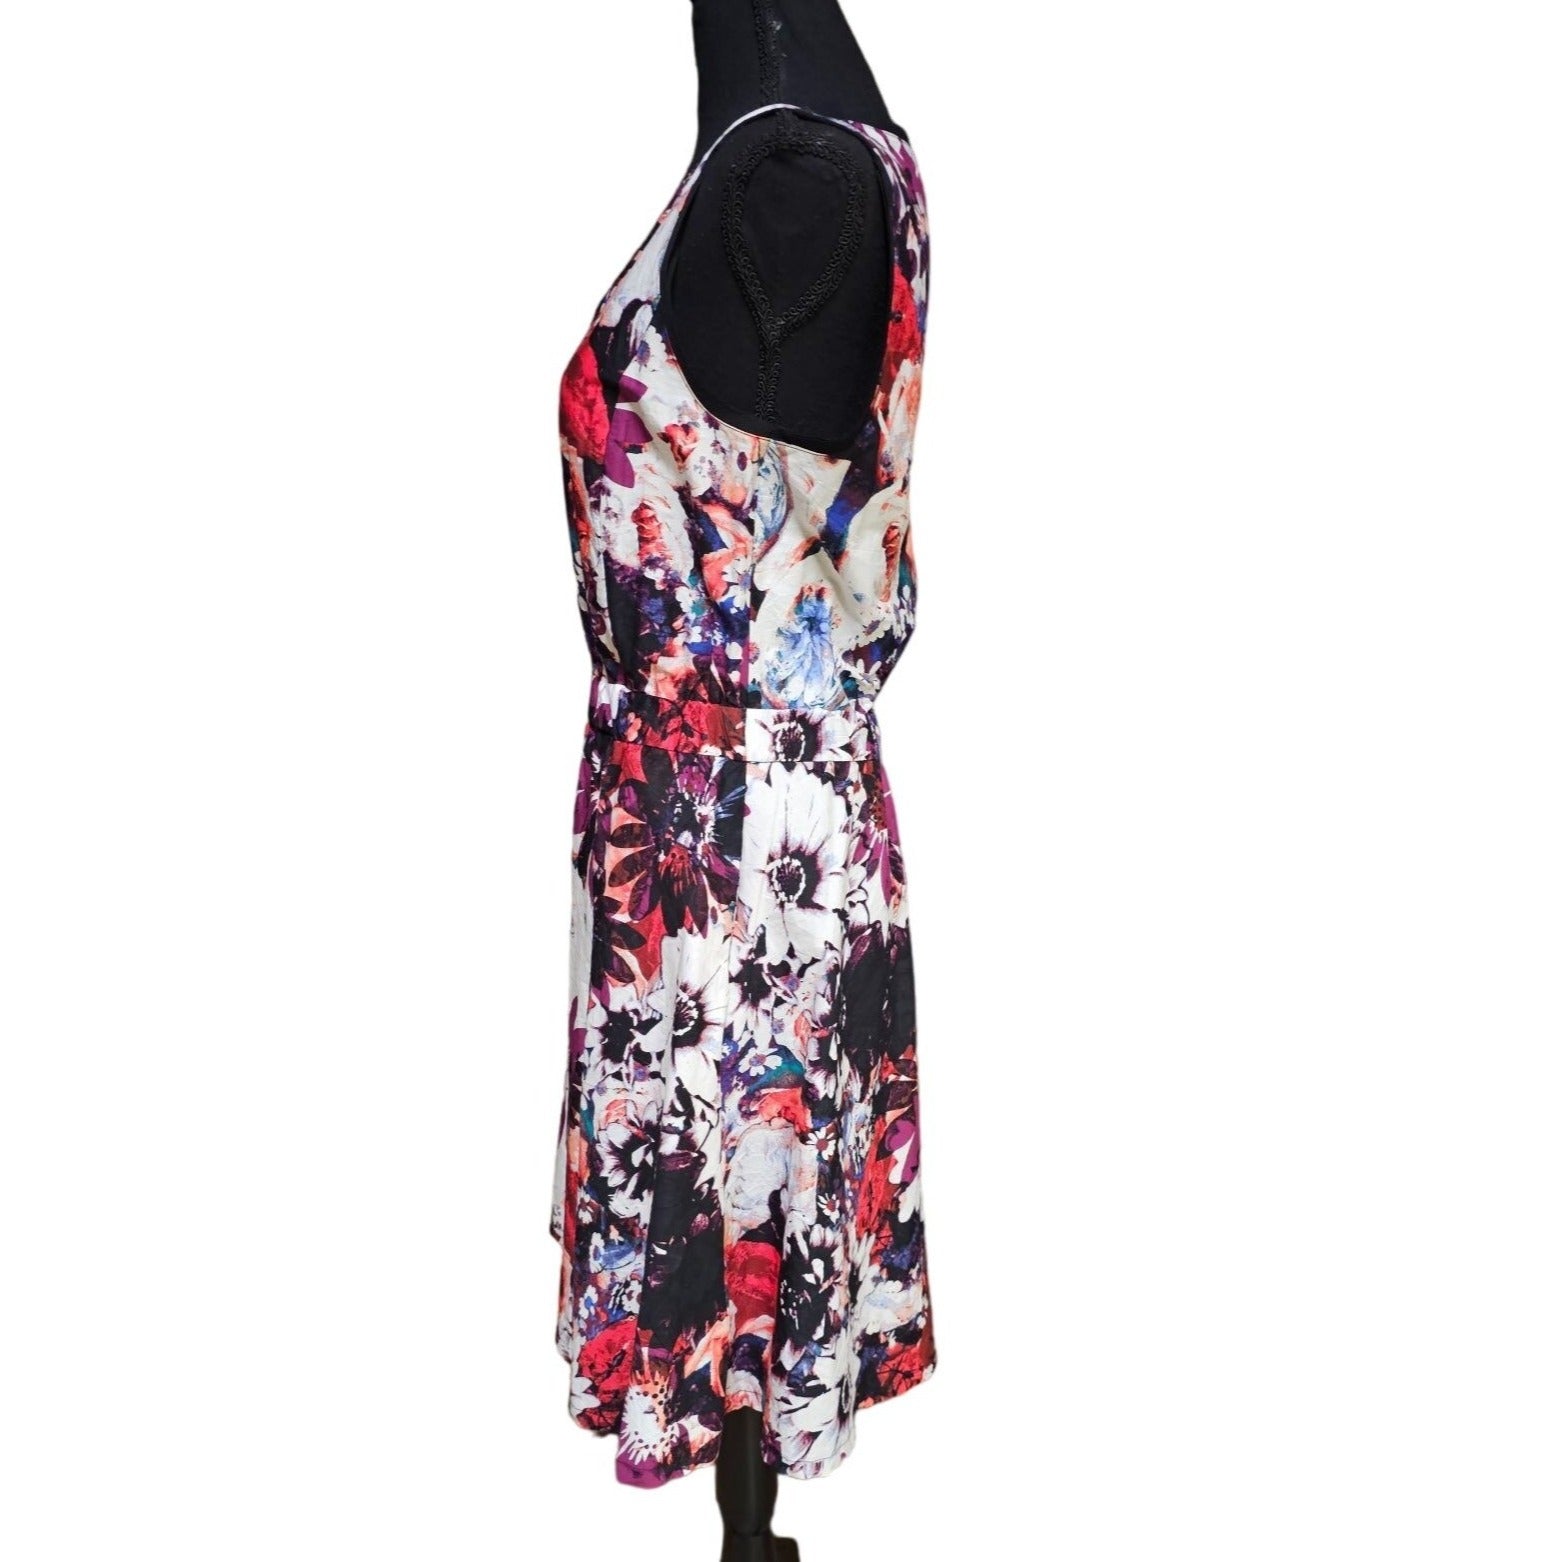 Simply Vera Vera Wang, Lightweight Colorful Summer Dress, Sundress, Size XS